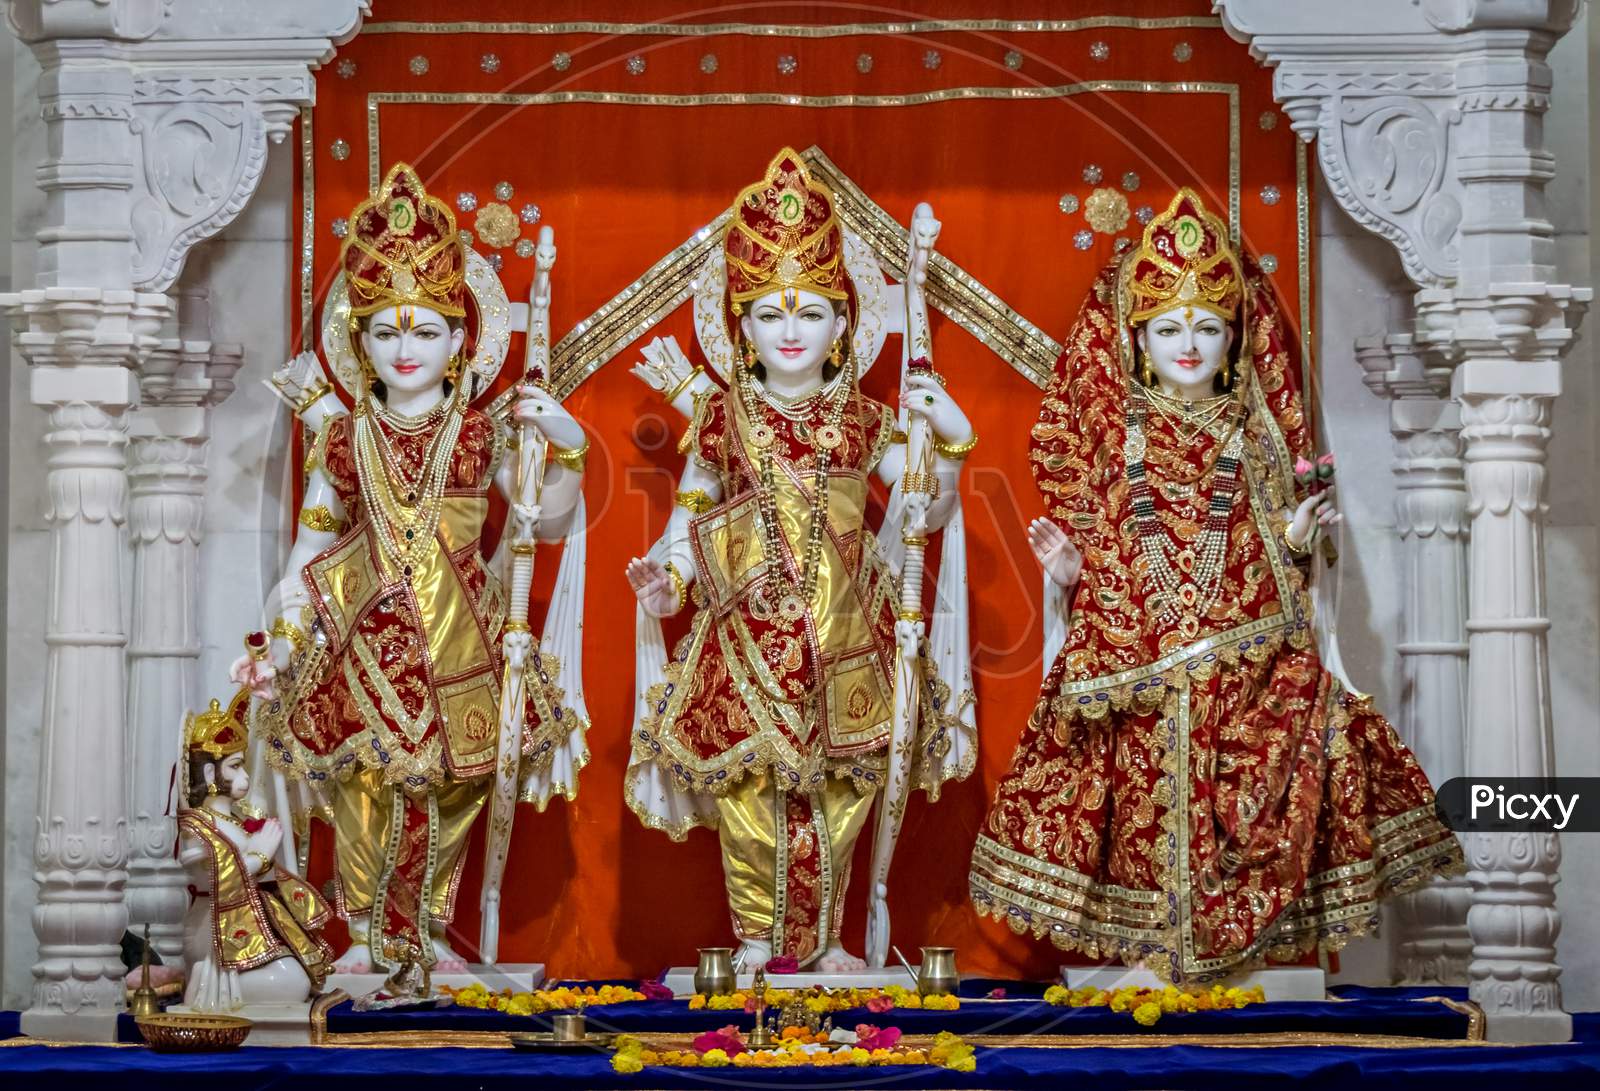 Decorated Idols Of Hindu Gods Ram, Lakshman & Godless Sita Together.